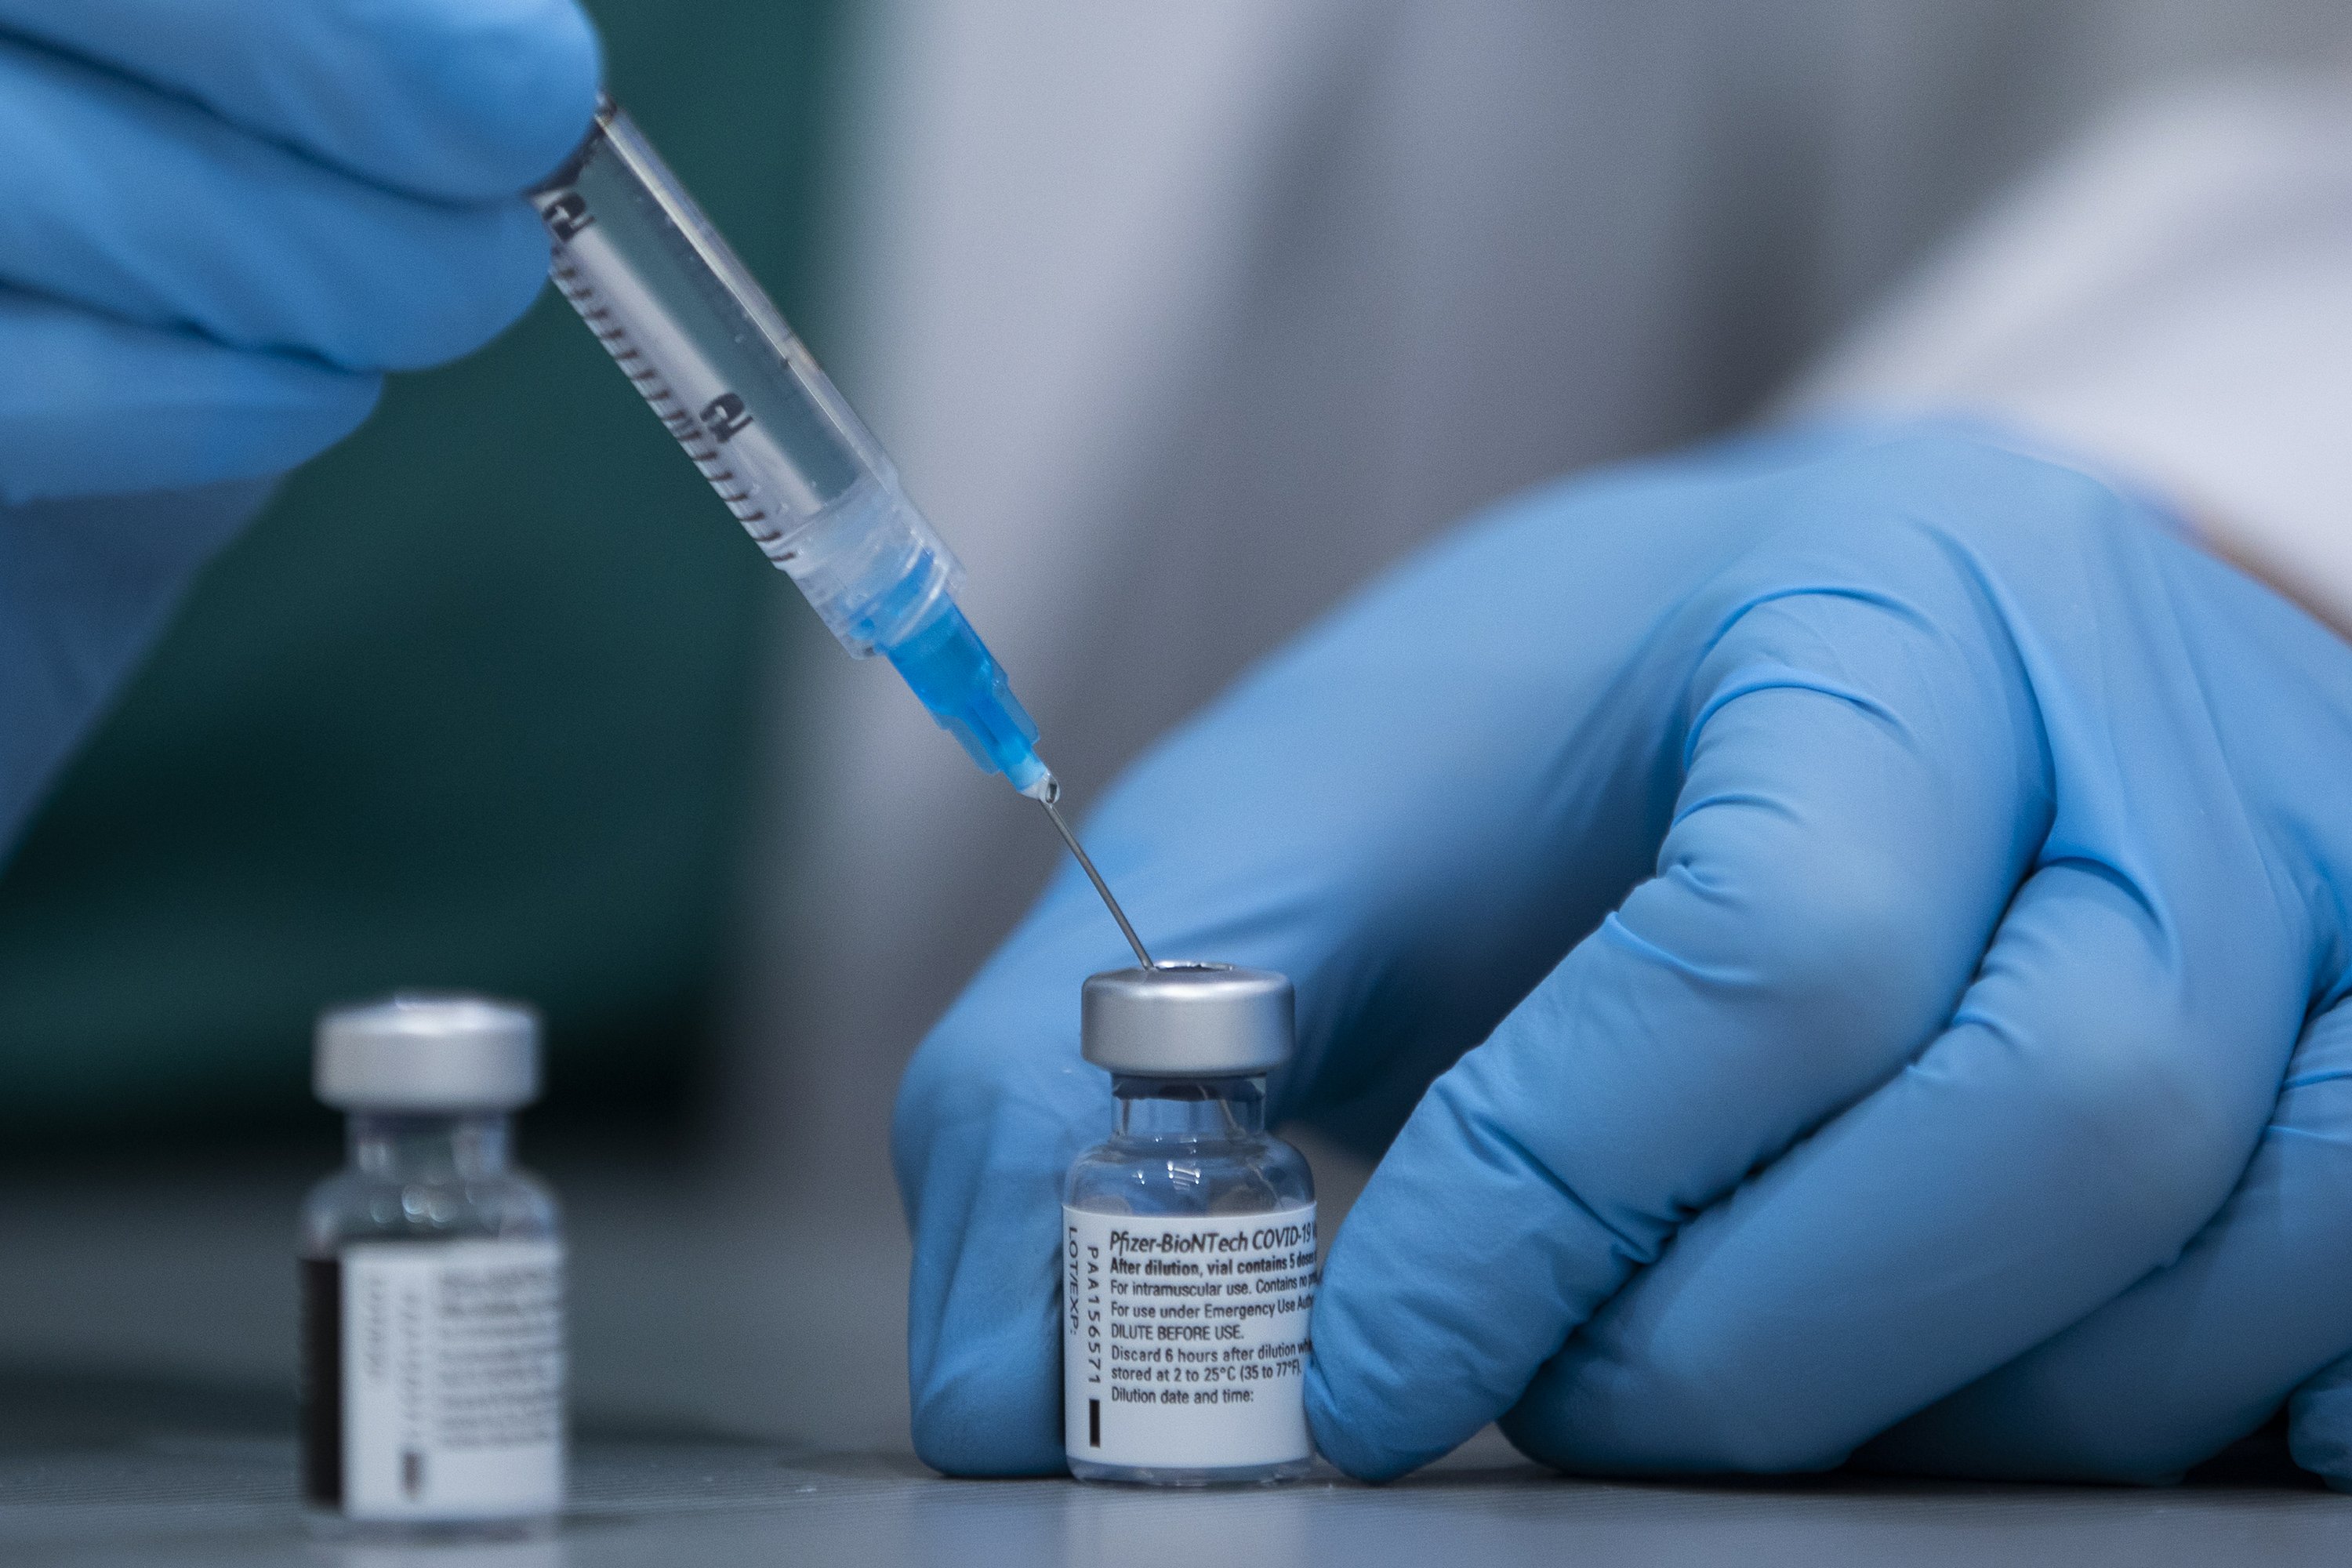 Israel will administer coronavirus vaccines to Palestinians